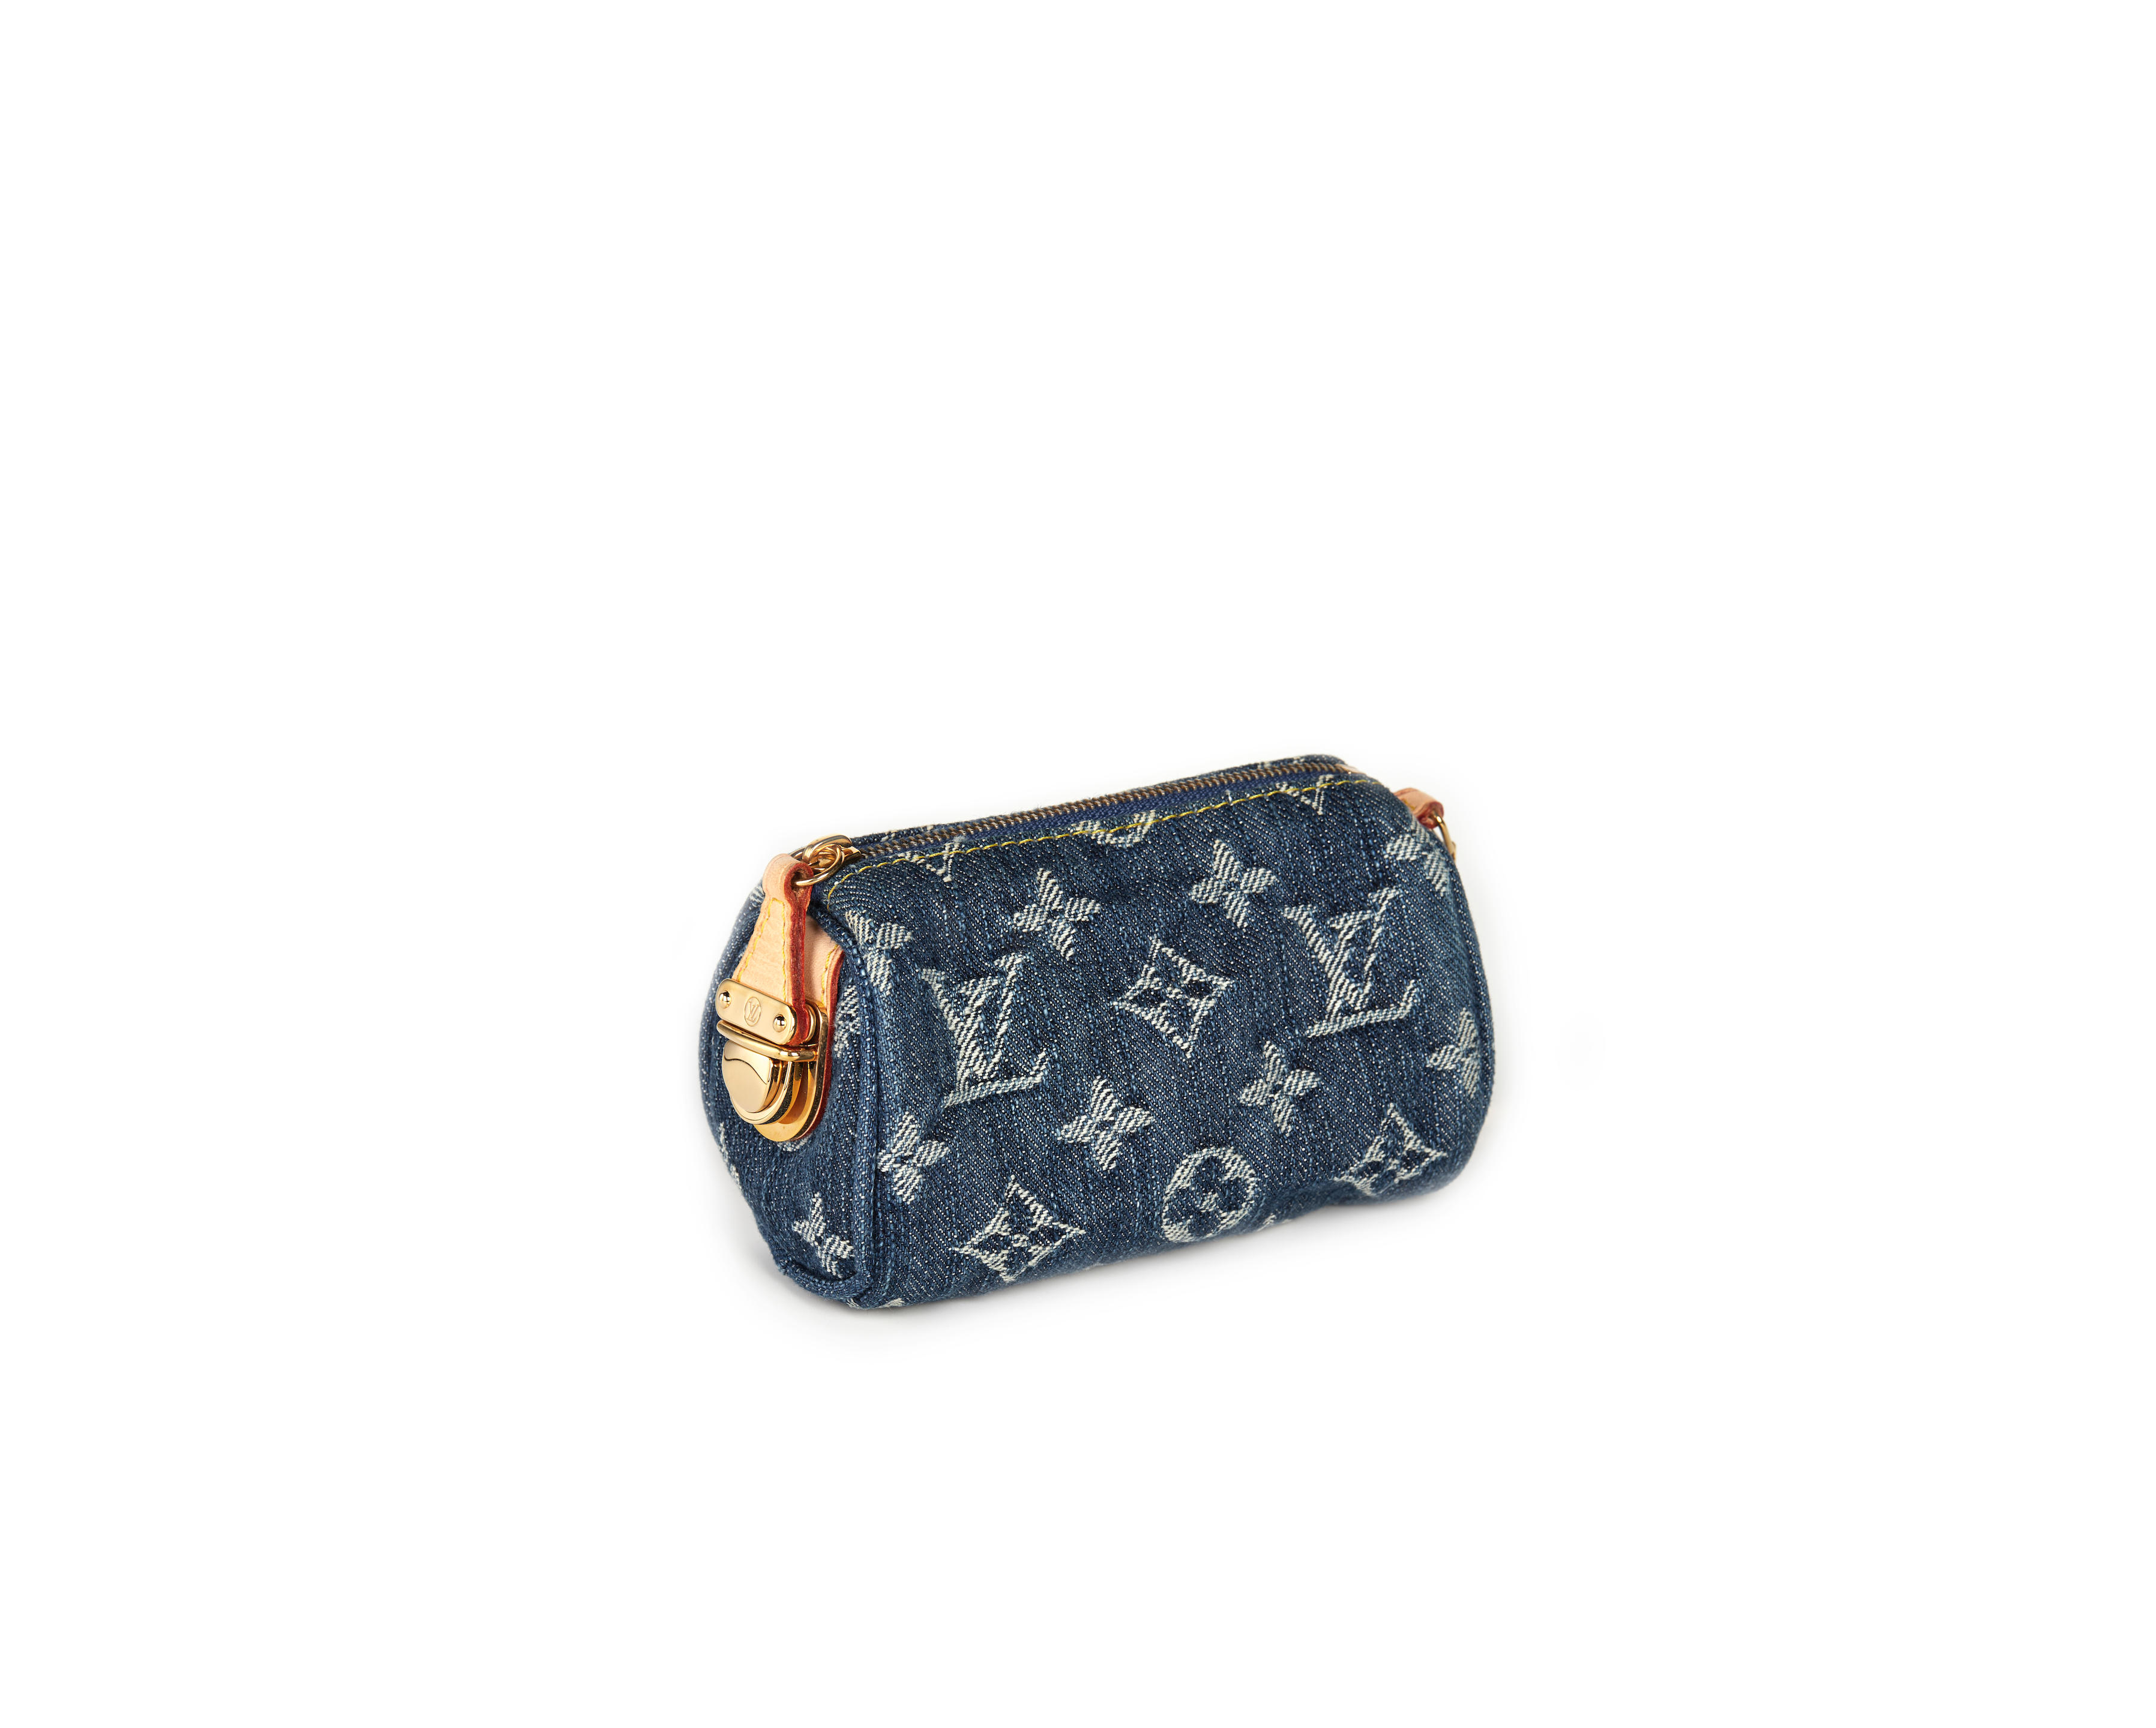 Lot - Blue Denim Louis Vuitton 'Neo Speedy' Bag